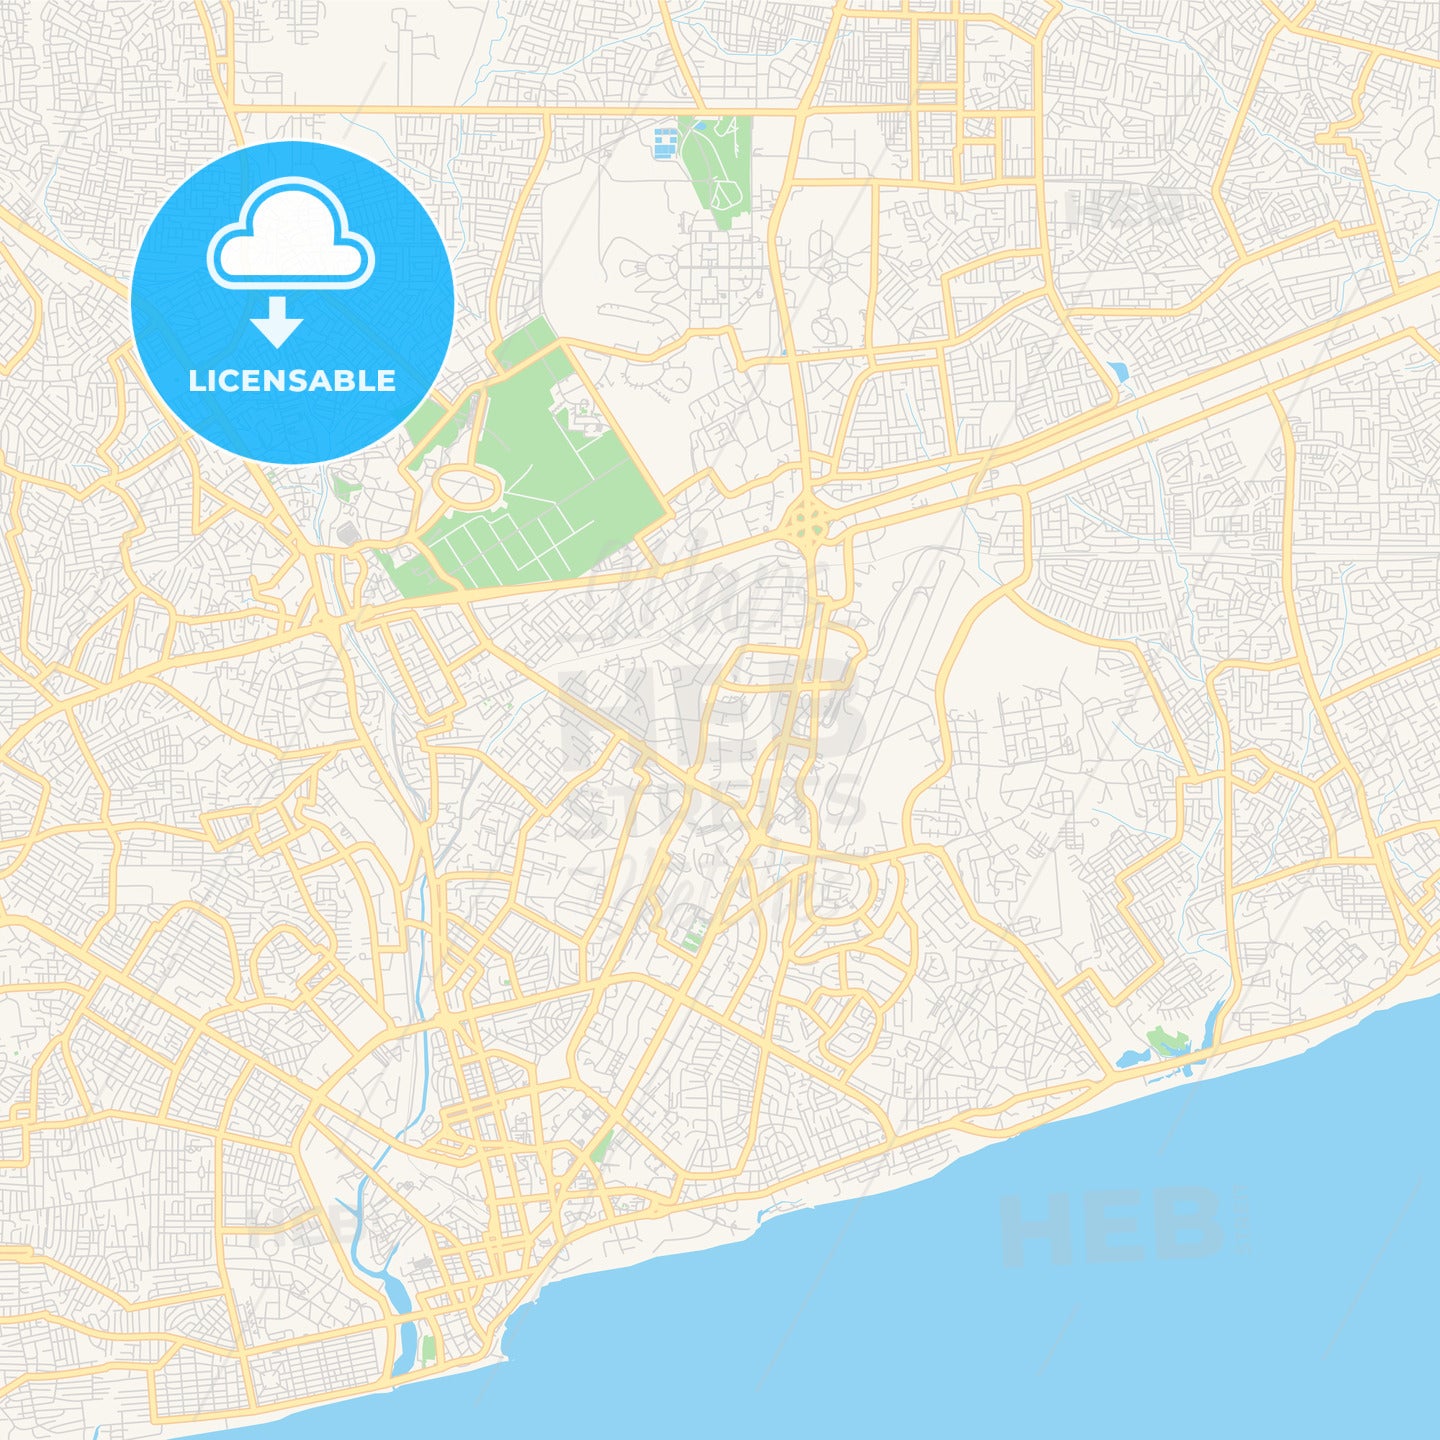 Printable street map of Accra, Ghana